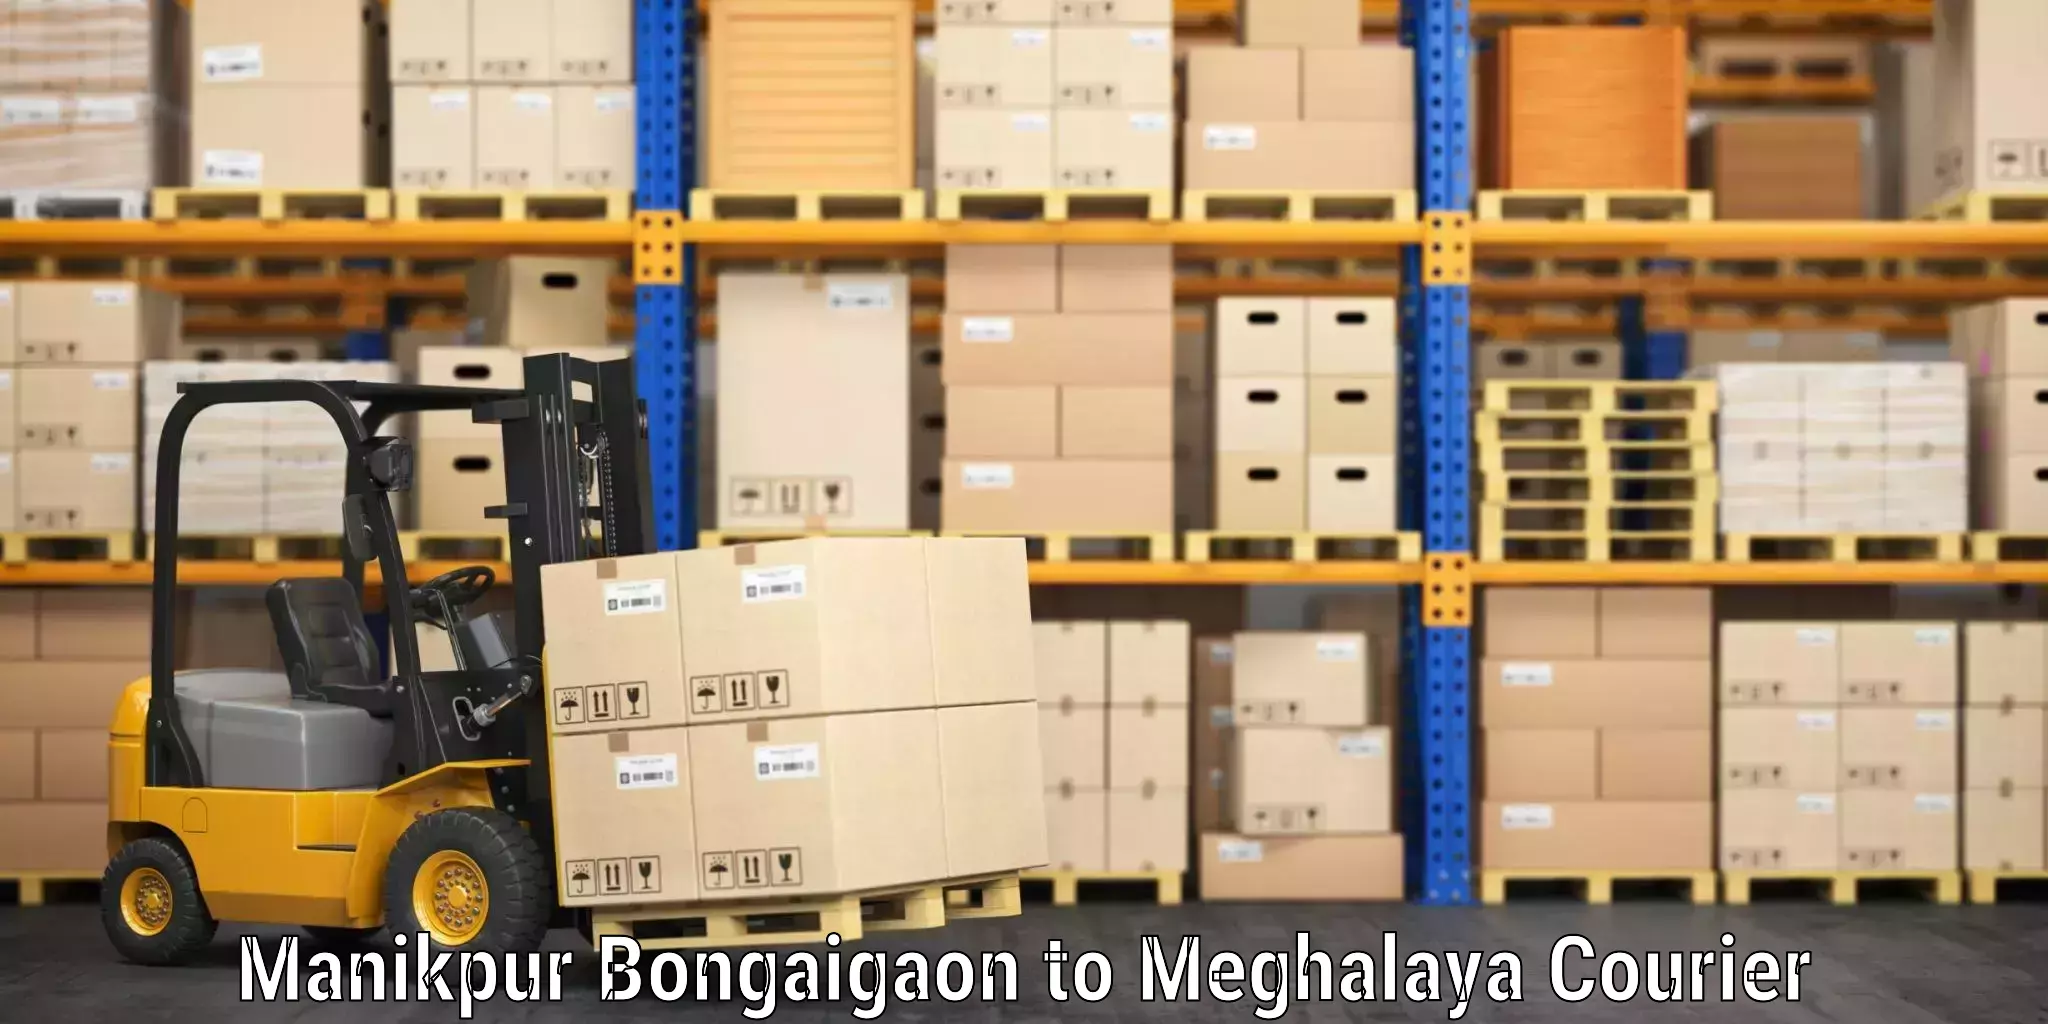 Luggage shipment specialists Manikpur Bongaigaon to Dkhiah West